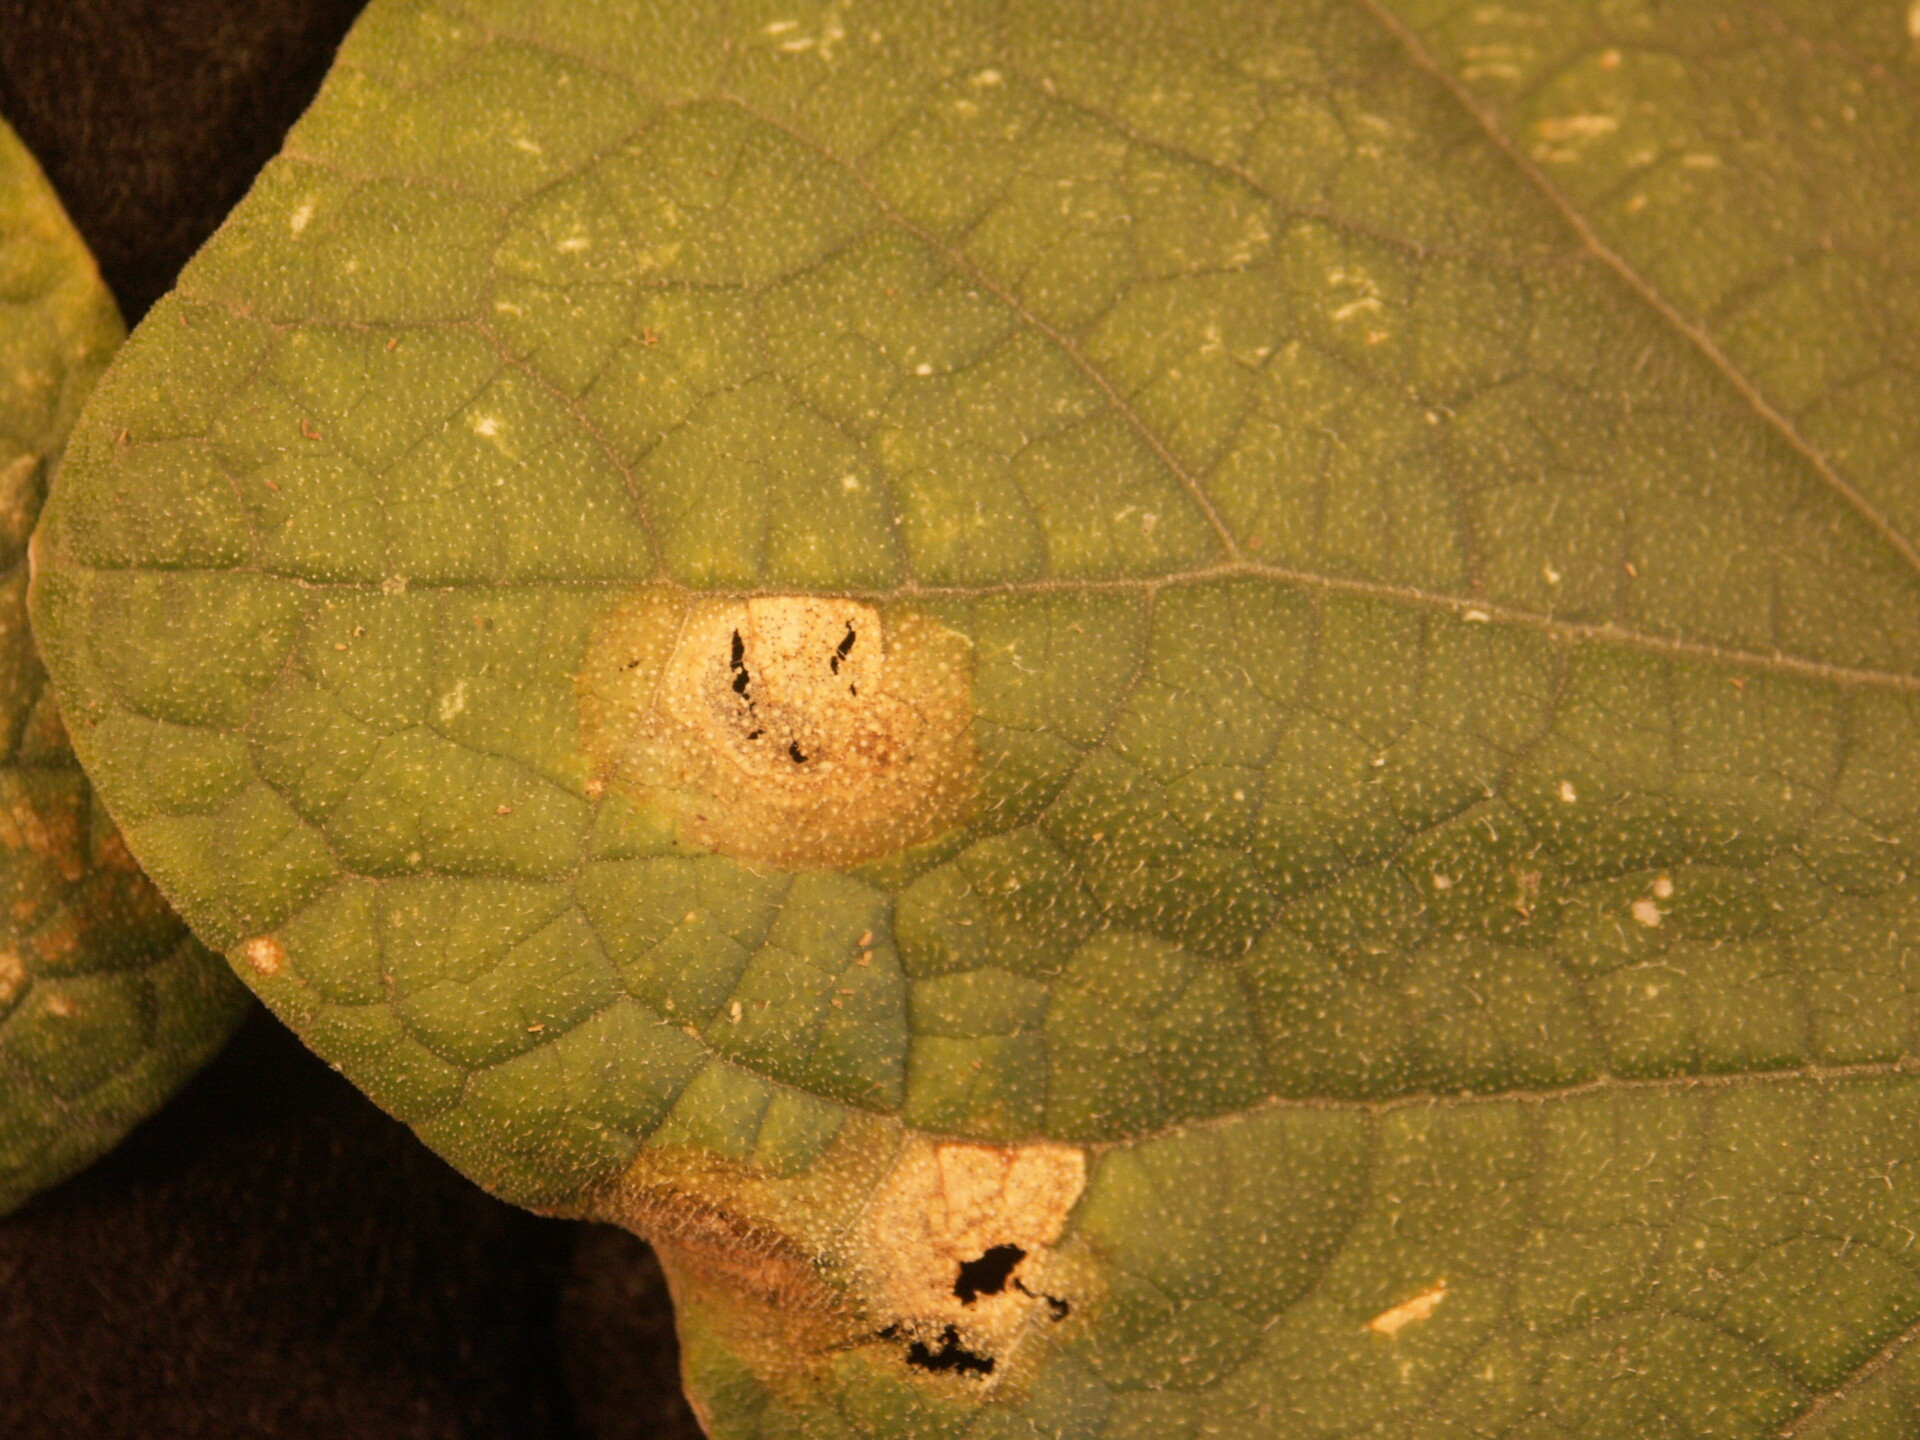 Gummy stem blight lesion on cucumber leaf. 